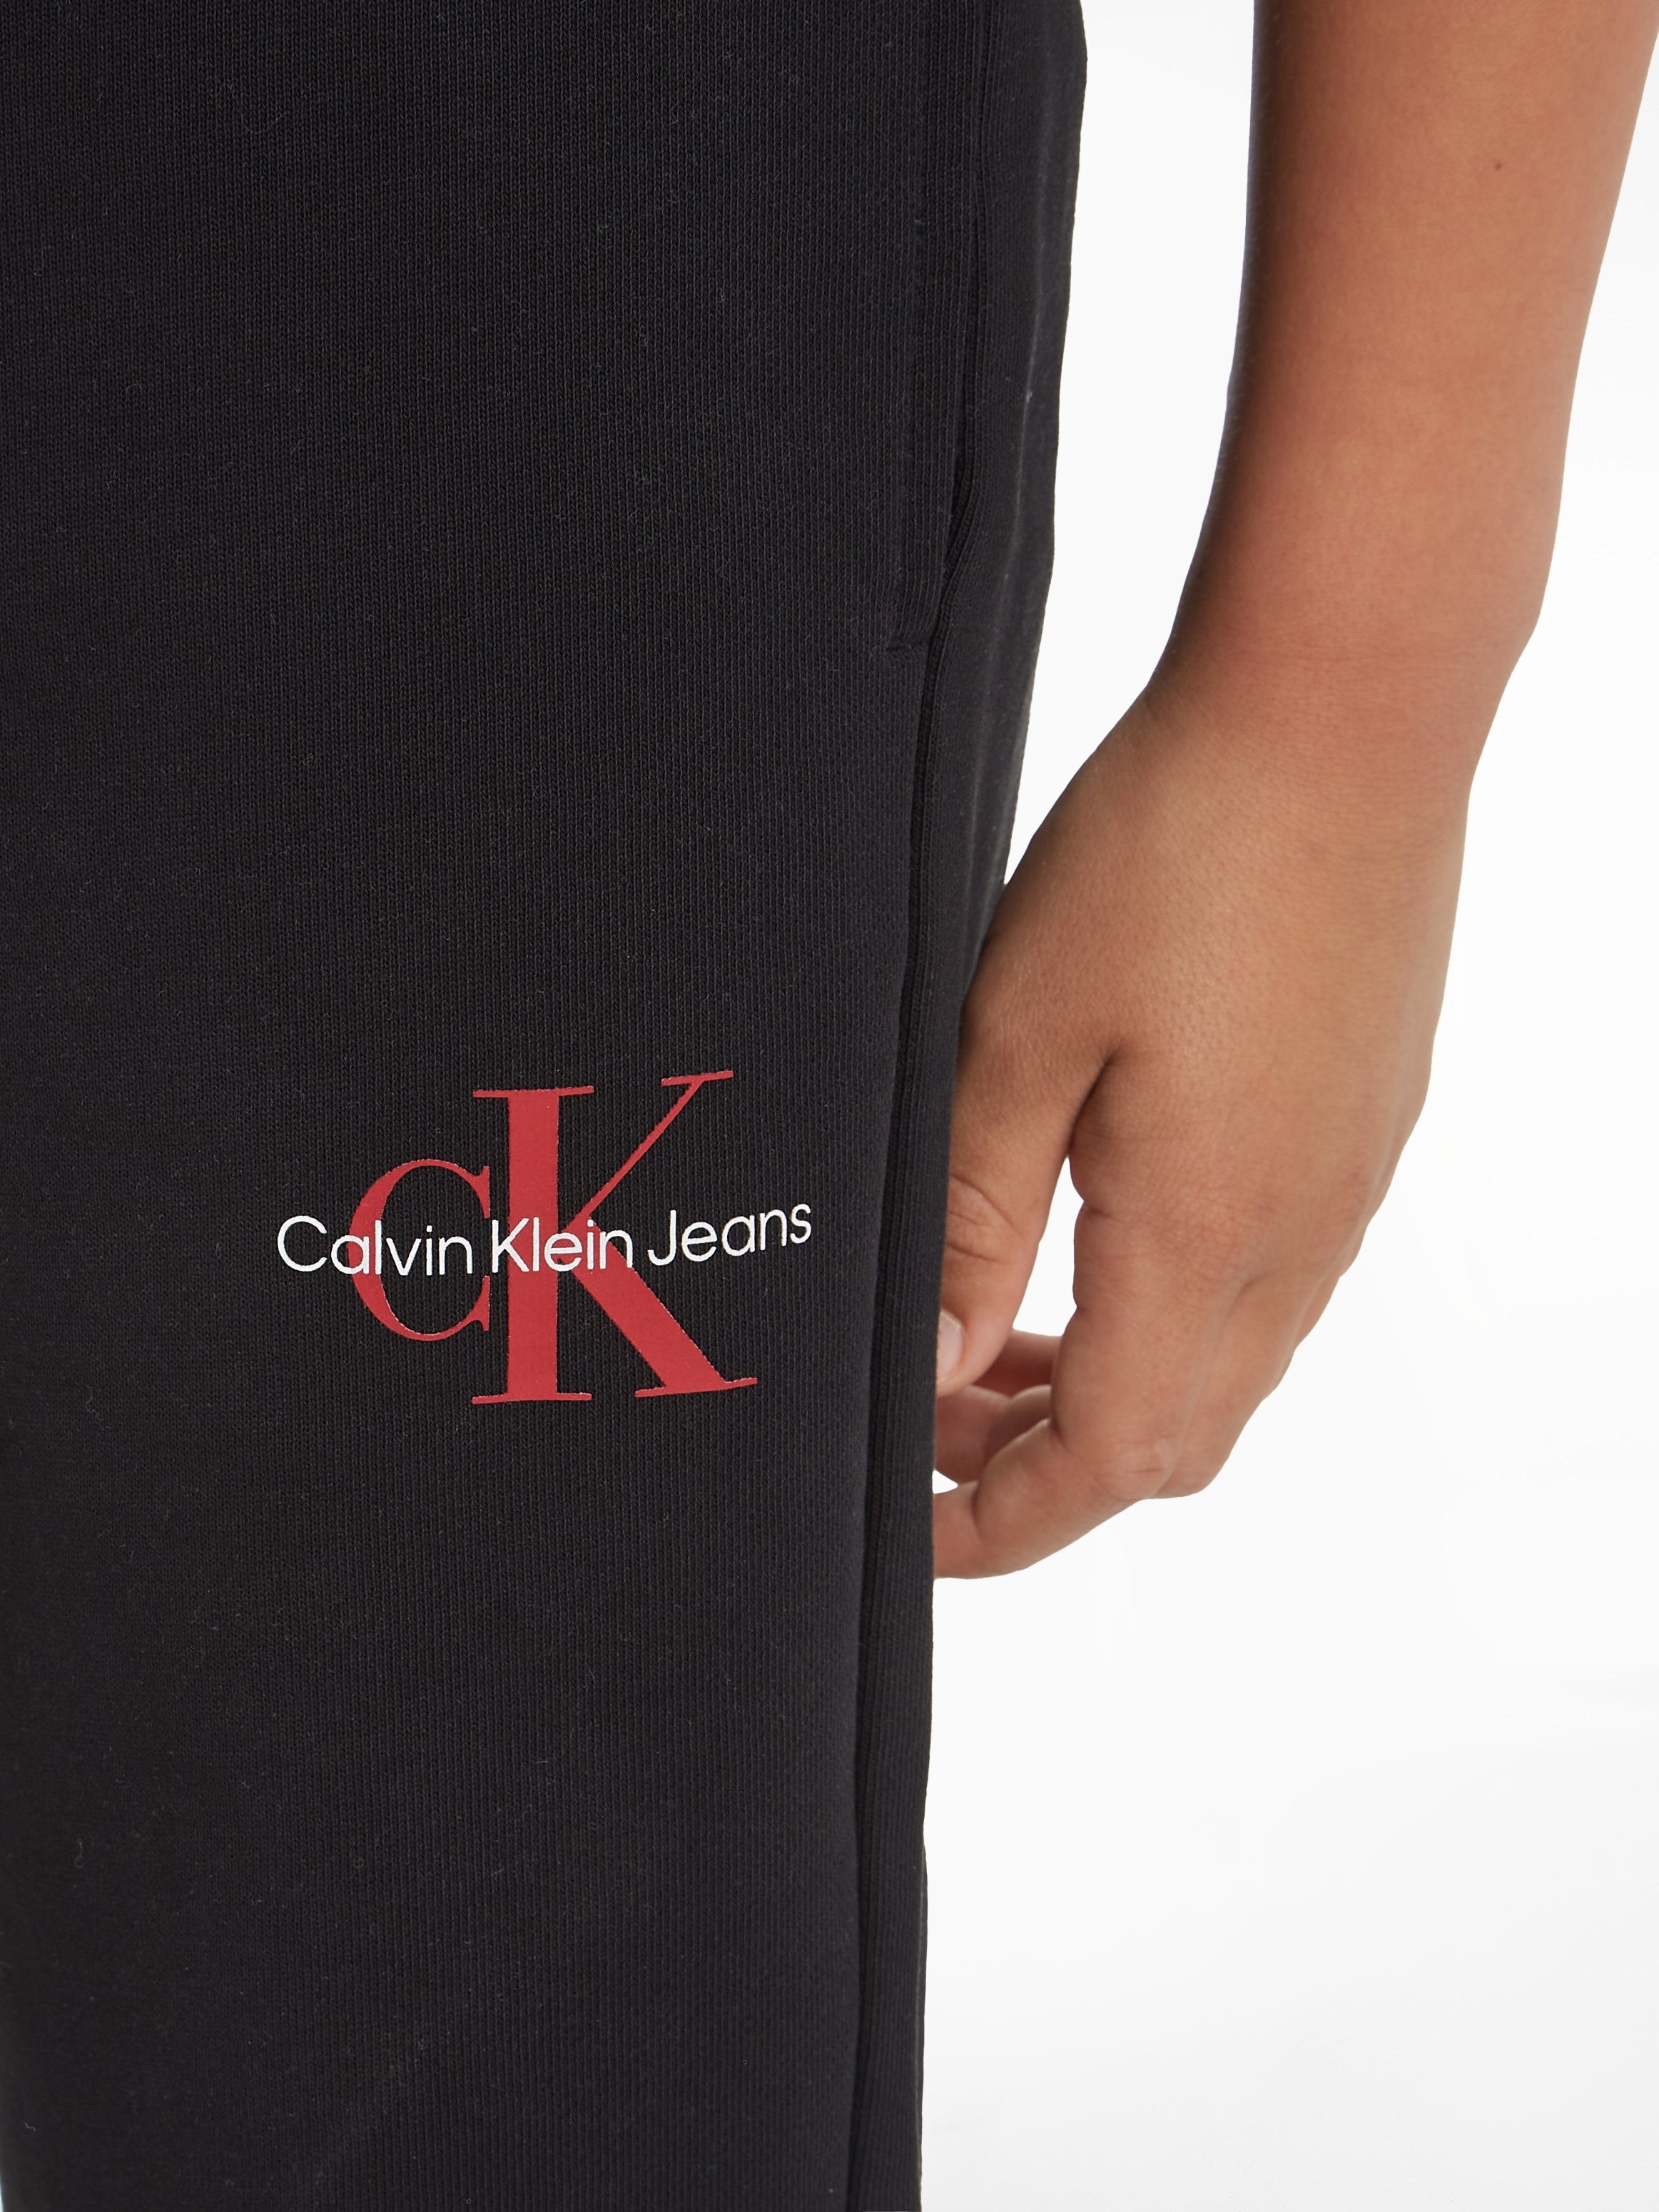 Colored Jeans MONOGRAM Black Calvin Klein SWEATPANTS mit Logodruck Sweathose Logo / LOGO